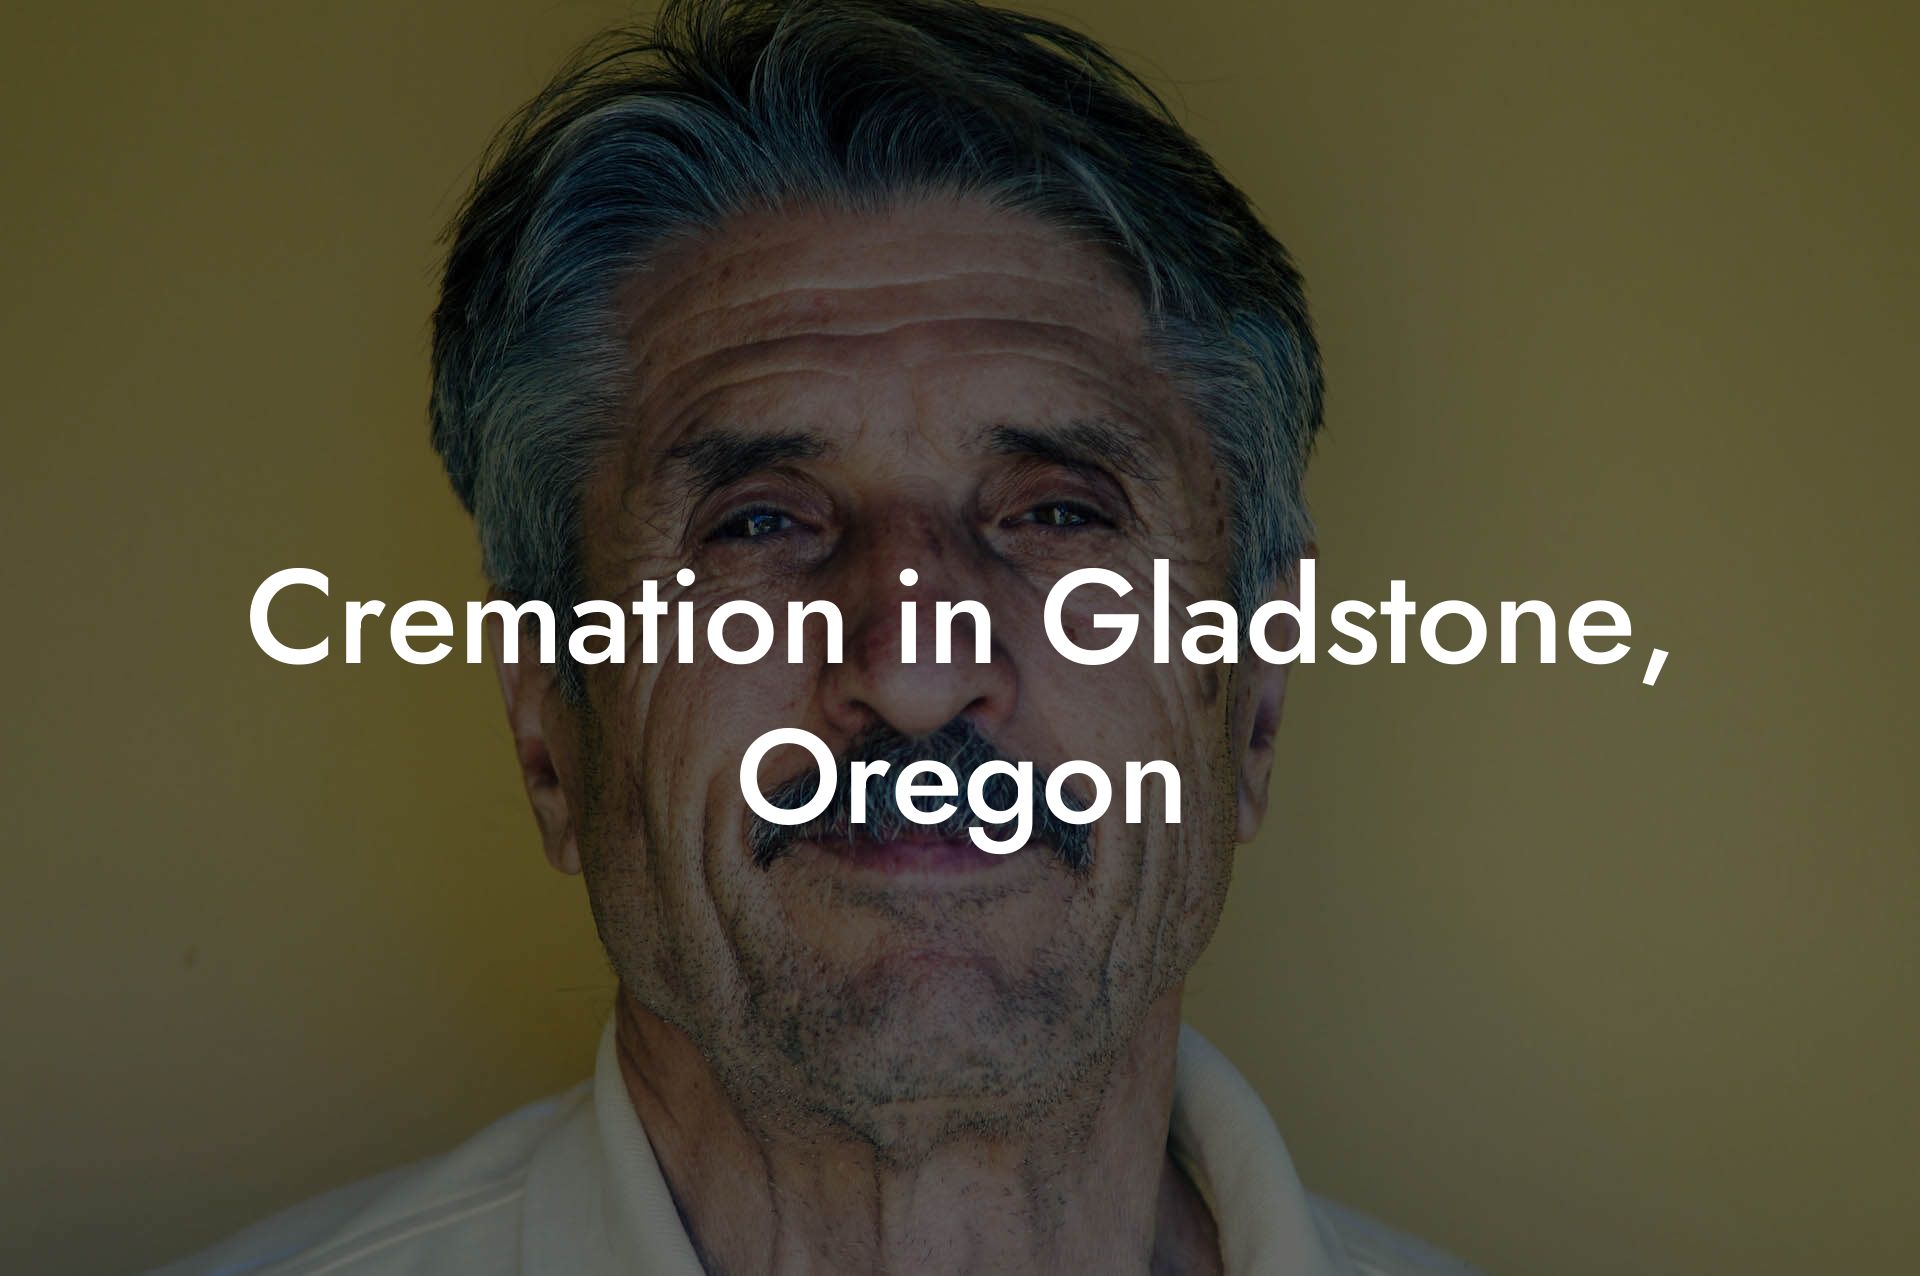 Cremation in Gladstone, Oregon